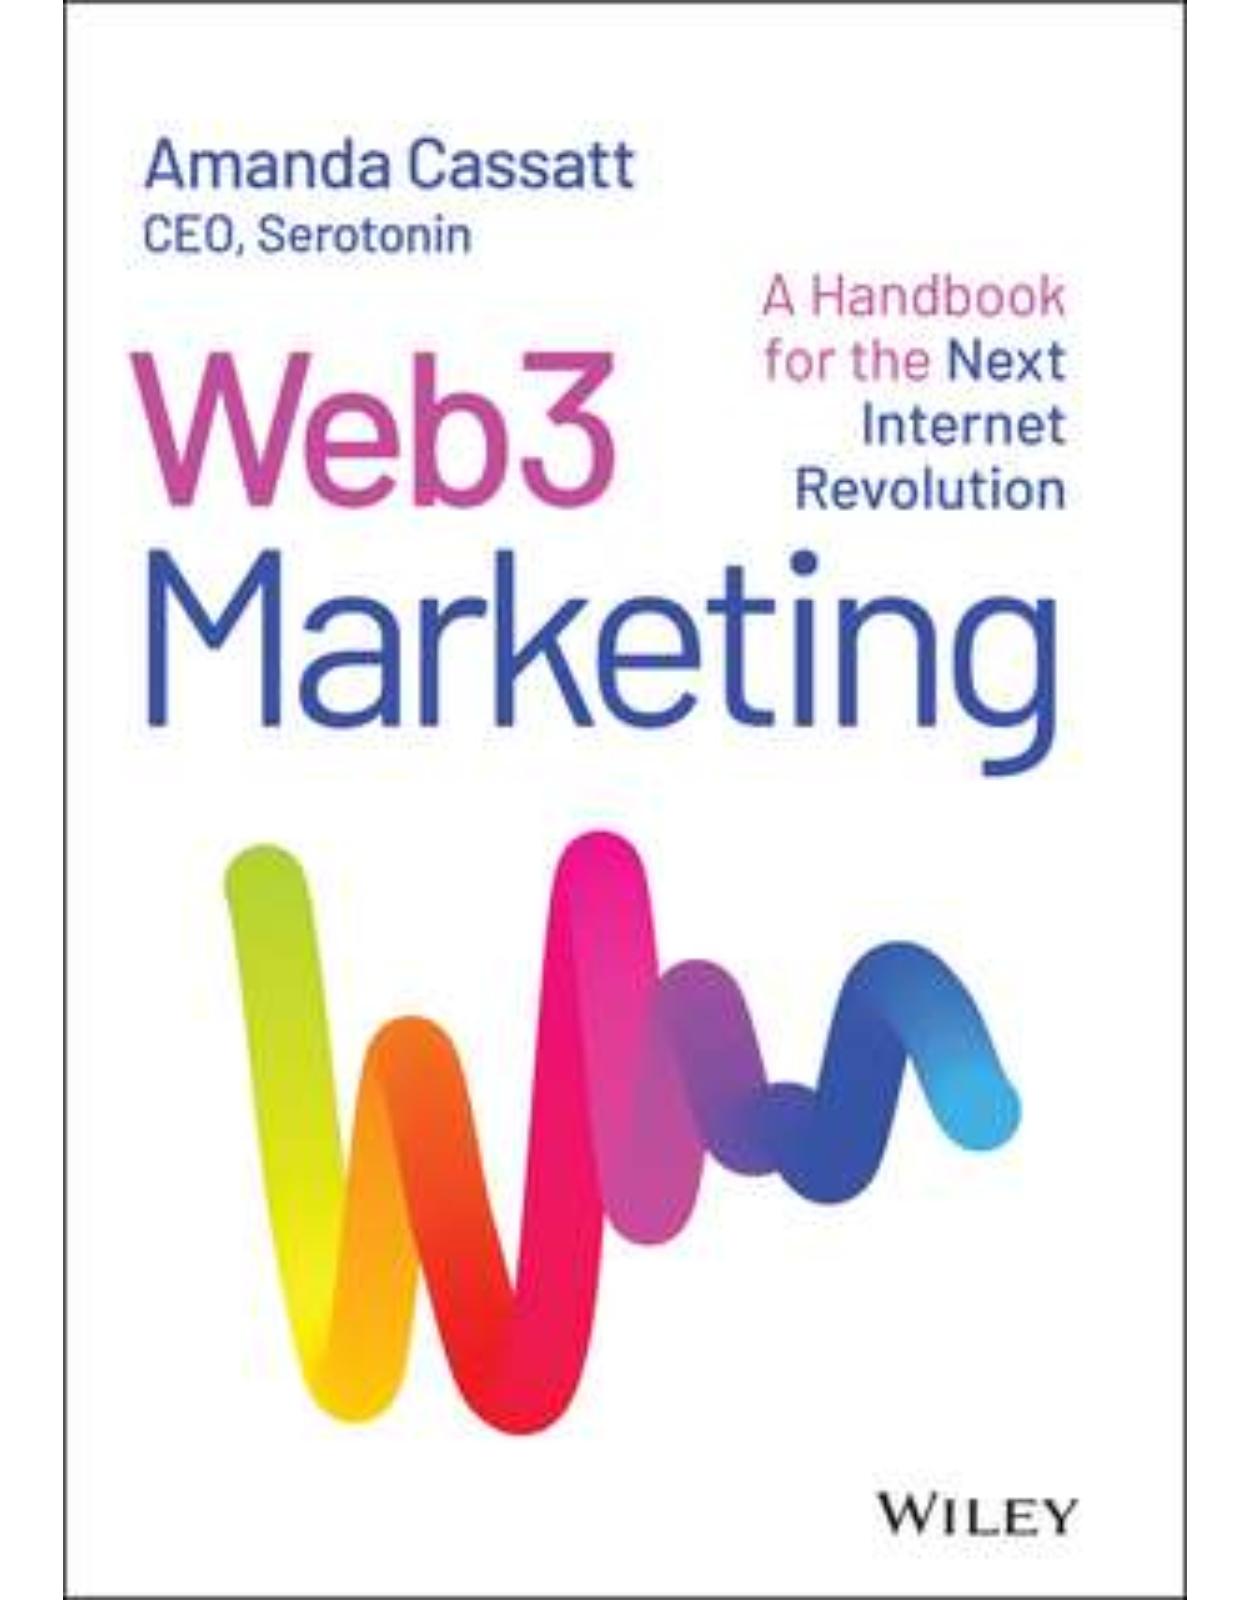 Web3 Marketing – A Handbook for the Next Internet Revolution